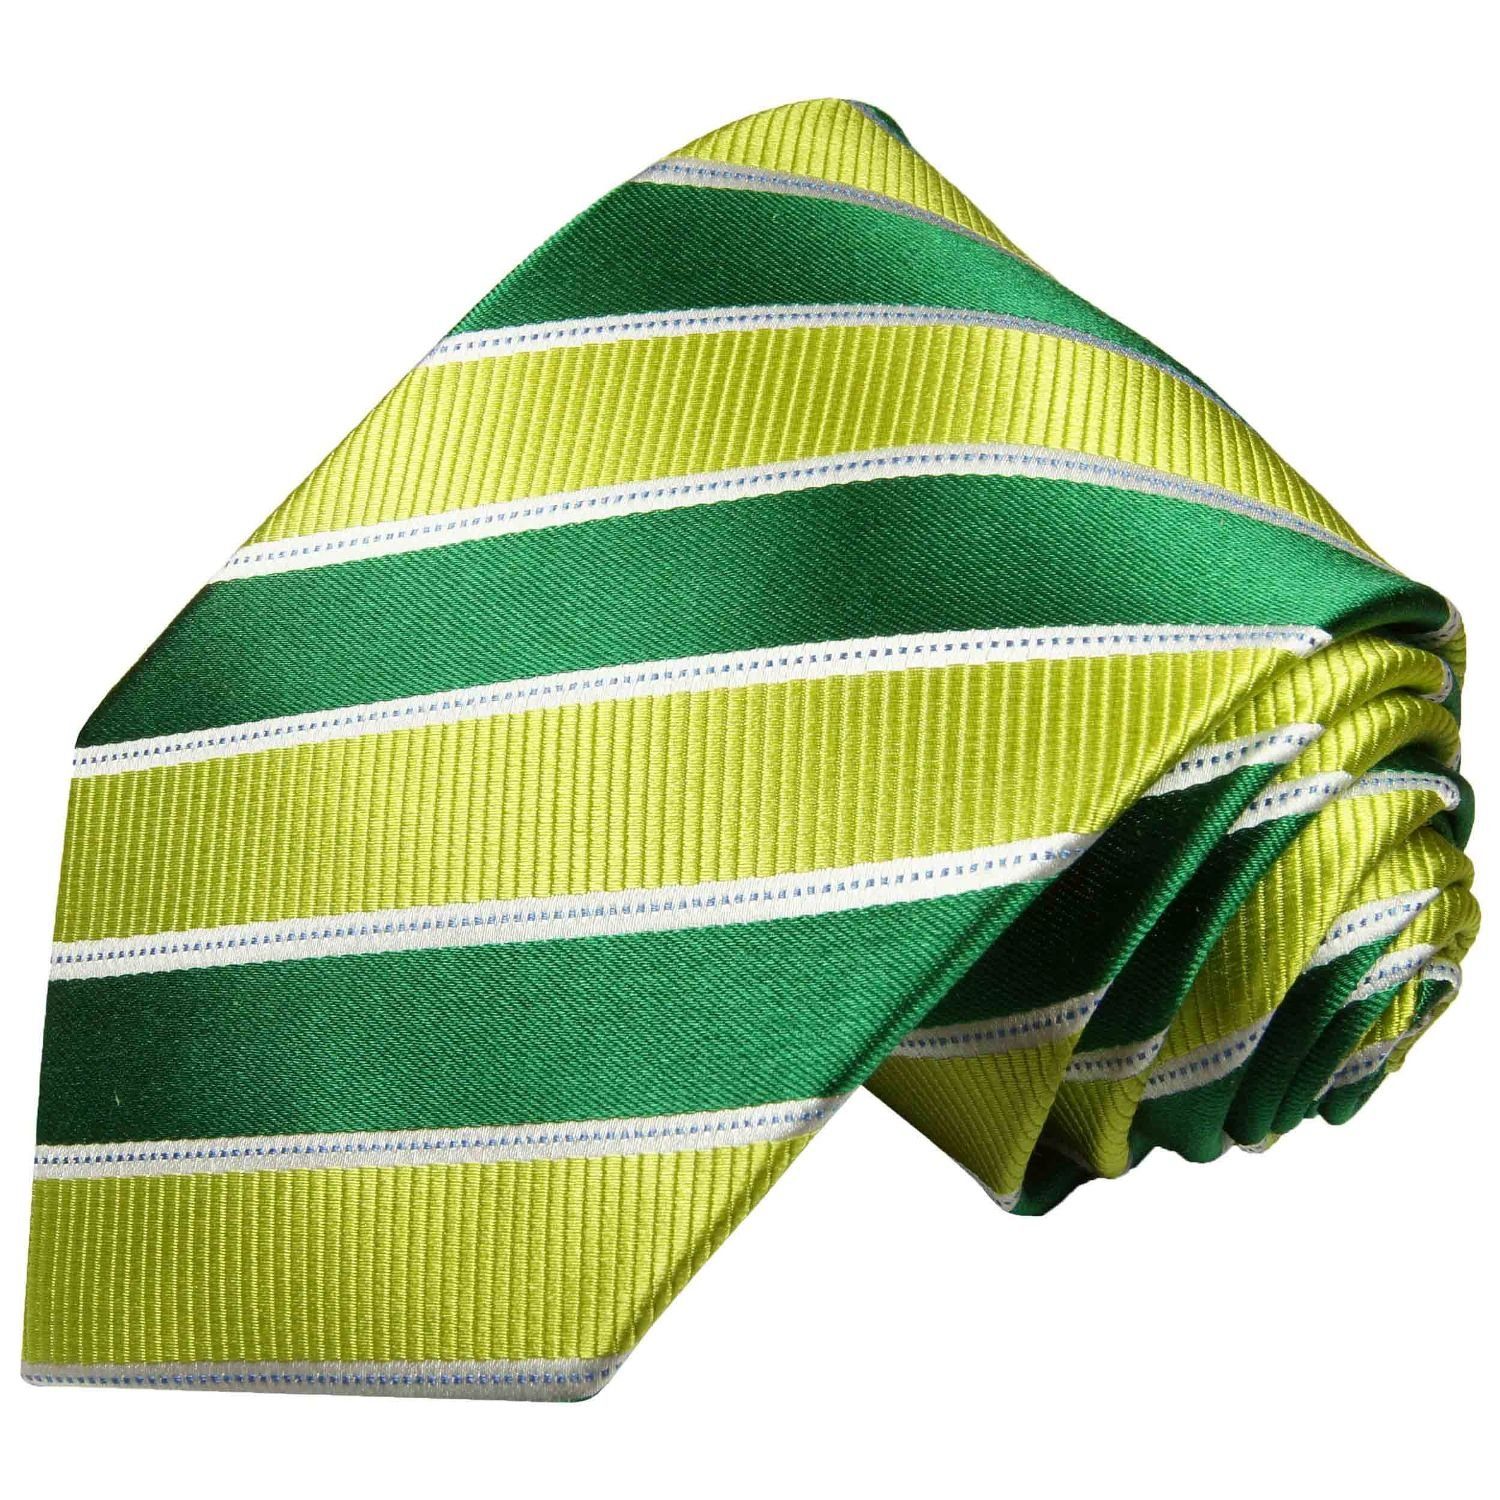 Paul Malone Krawatte Moderne Herren Seidenkrawatte gestreift 100% Seide Schmal (6cm), grün hellgrün 262